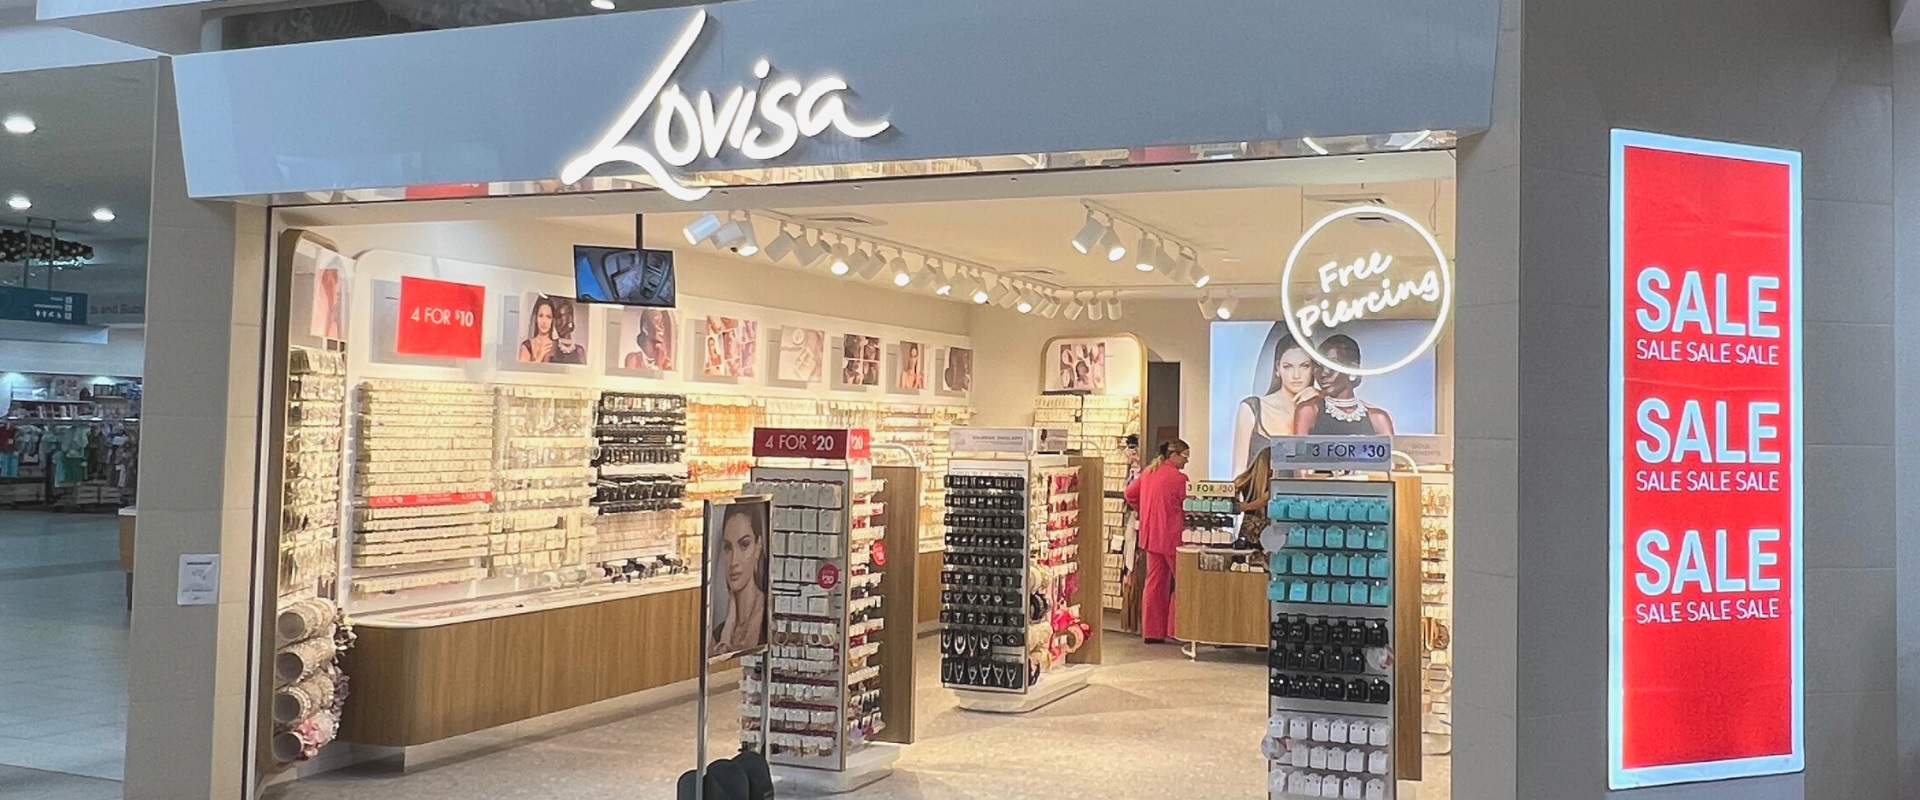 Lovisa: coming to America - Intelligent Investor